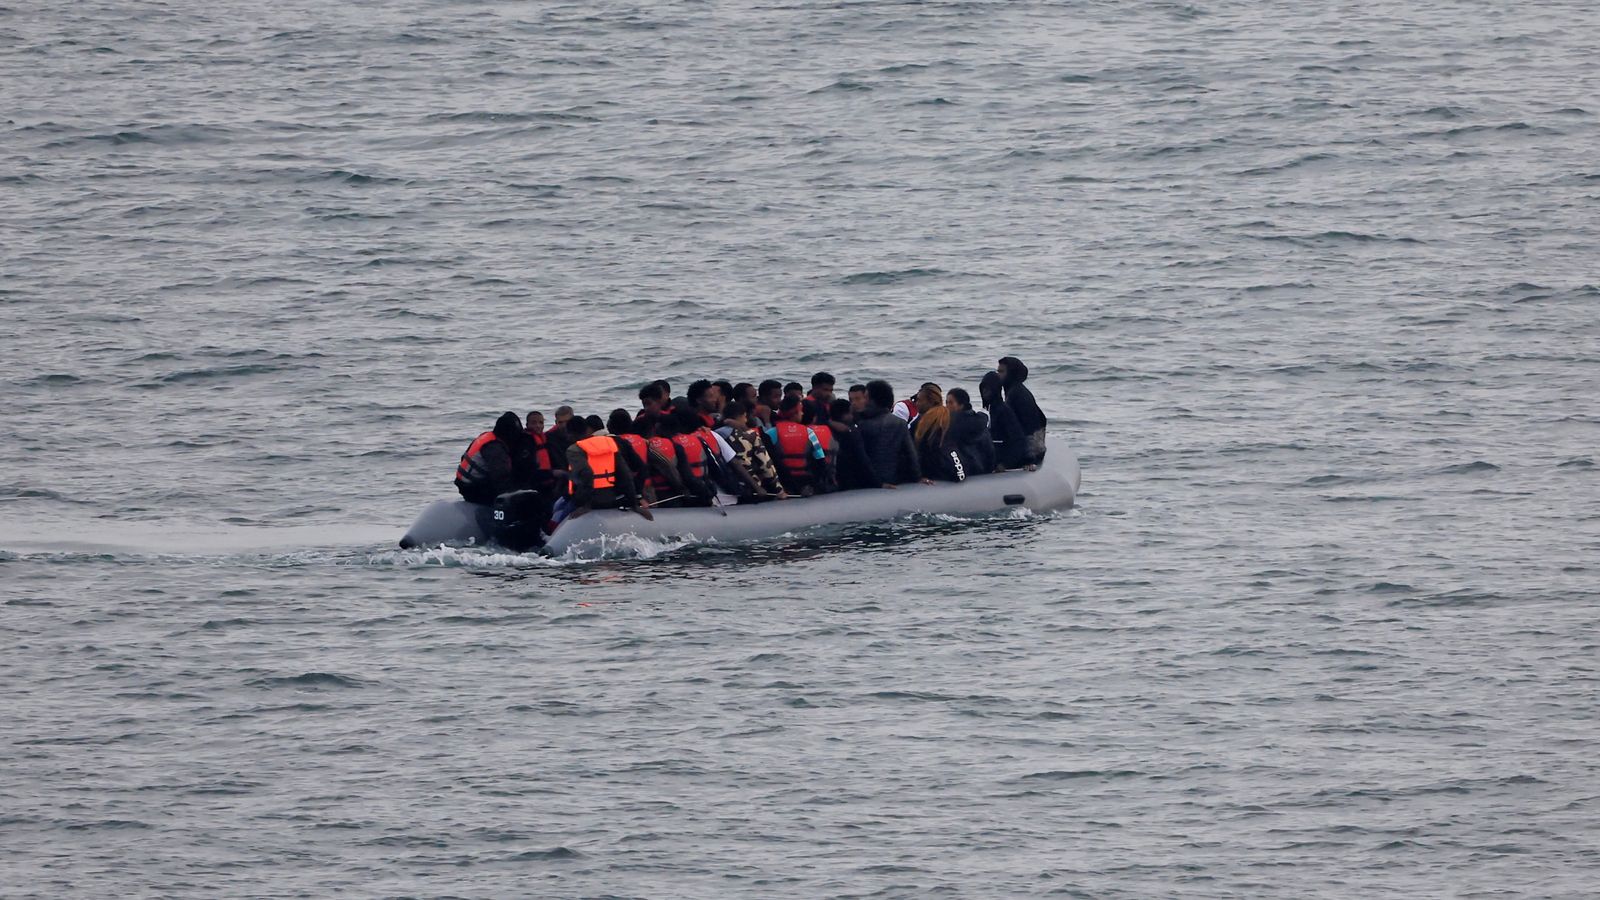 boat carrying migrants sinks in channel